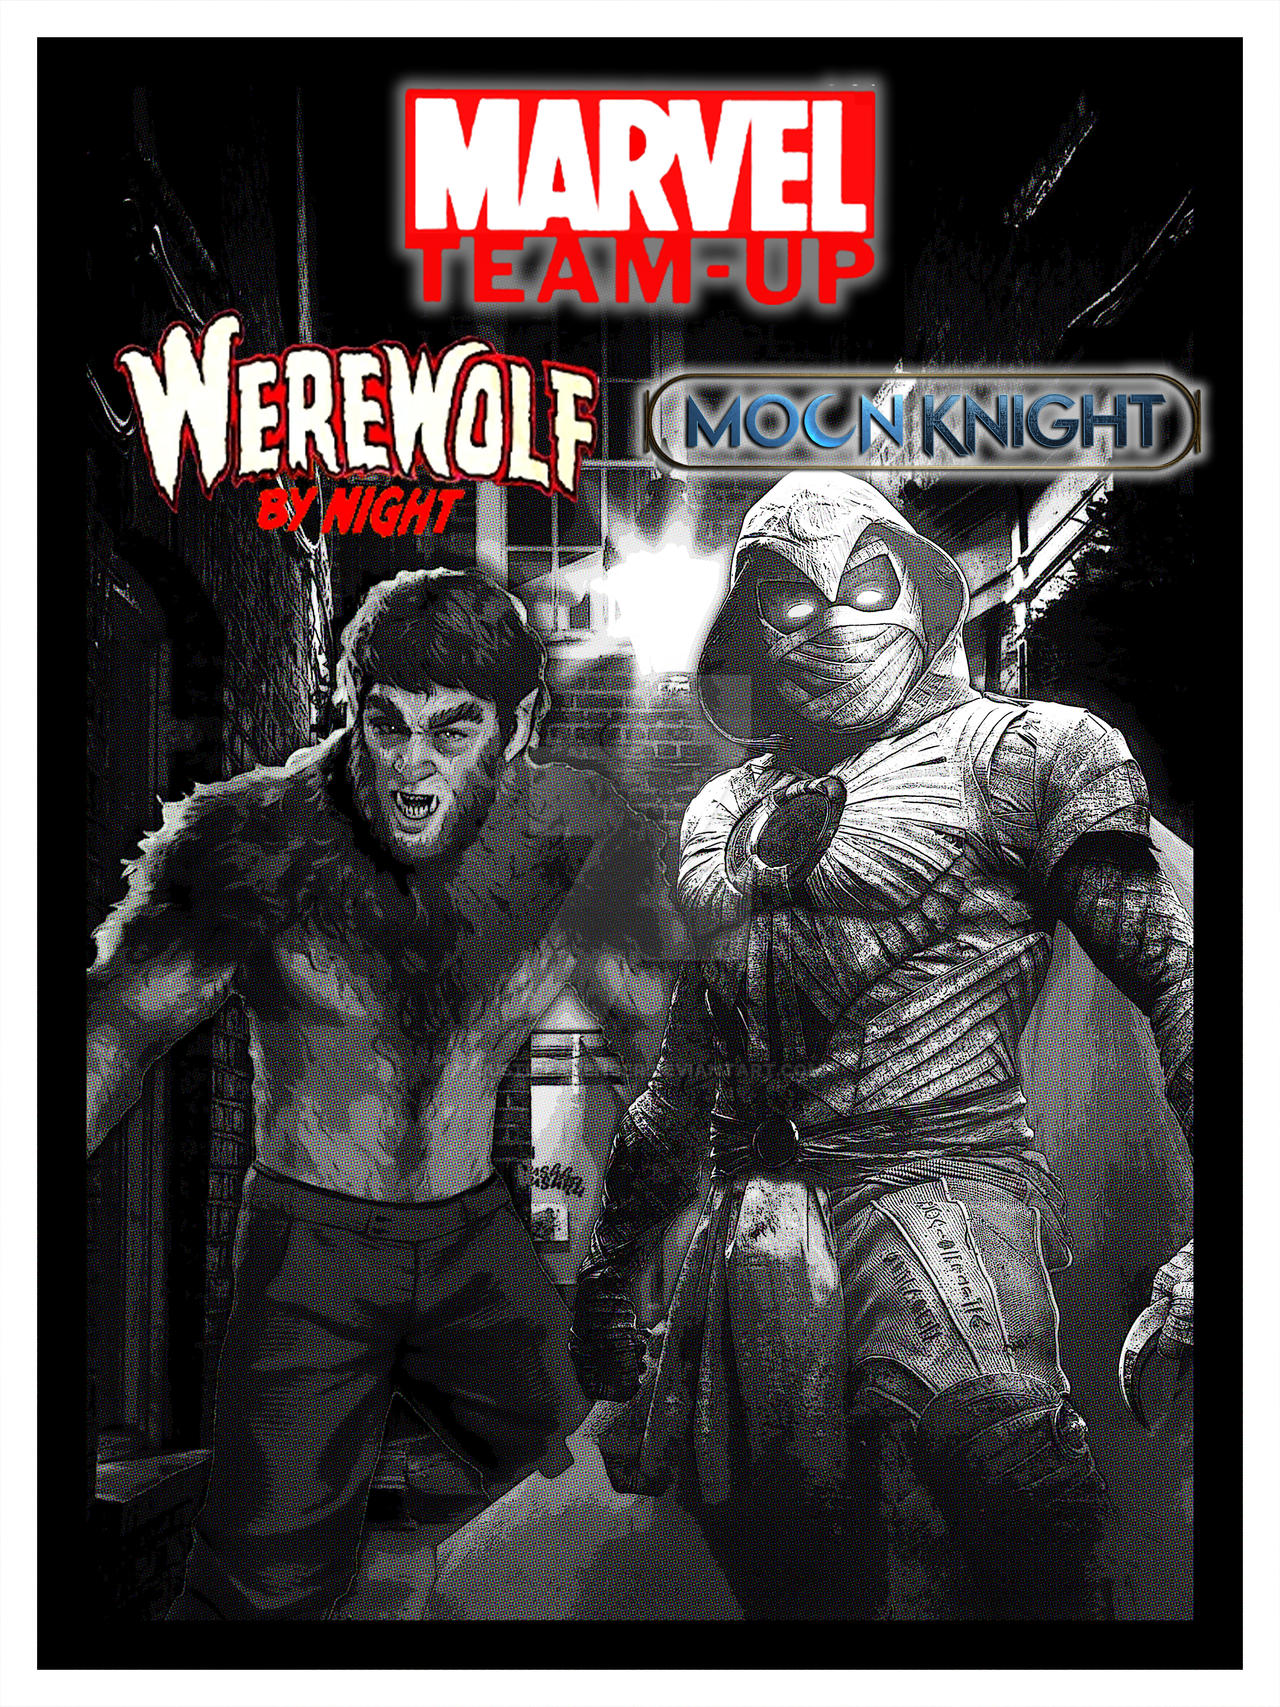 Marvel Team Up: Moonknight / Werewolf By Night by Justiceavenger on  DeviantArt